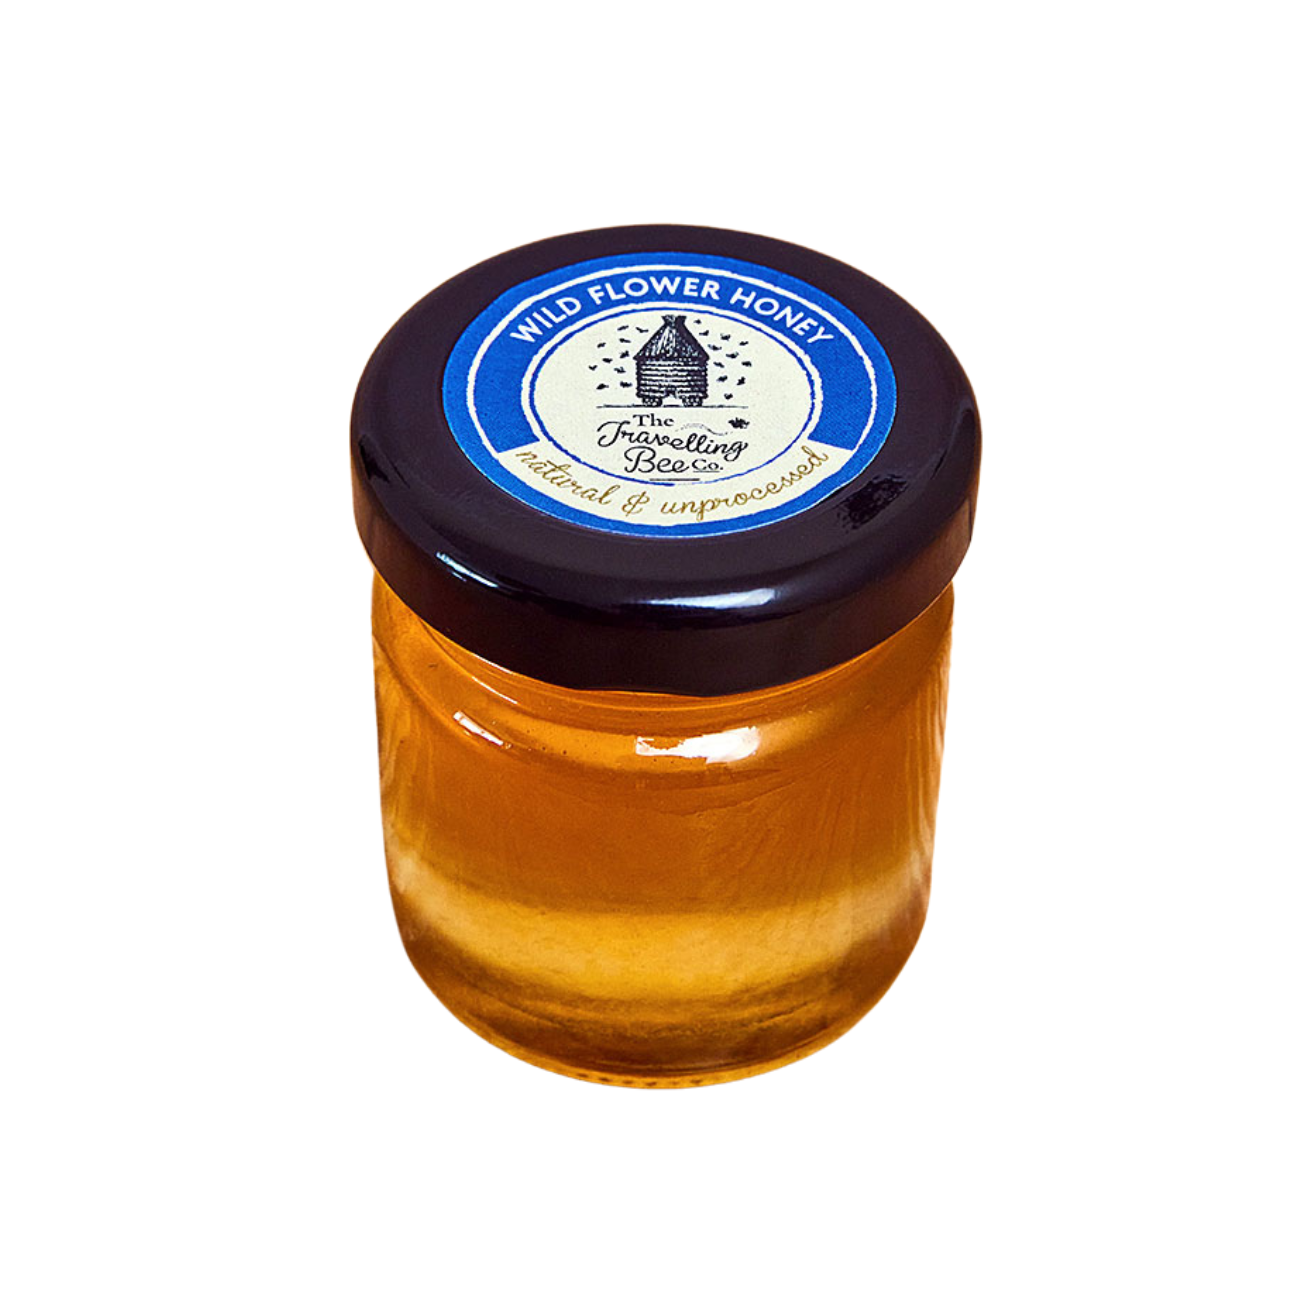 Wild Flower Honey (North East England) - Mini Jar 40g